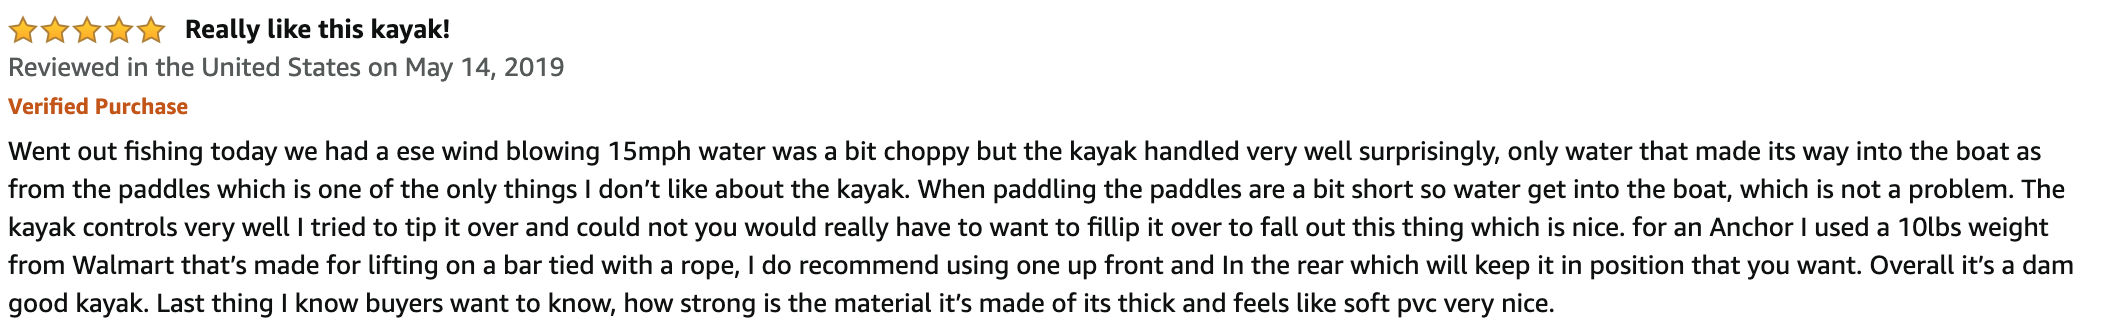 kayak review 2